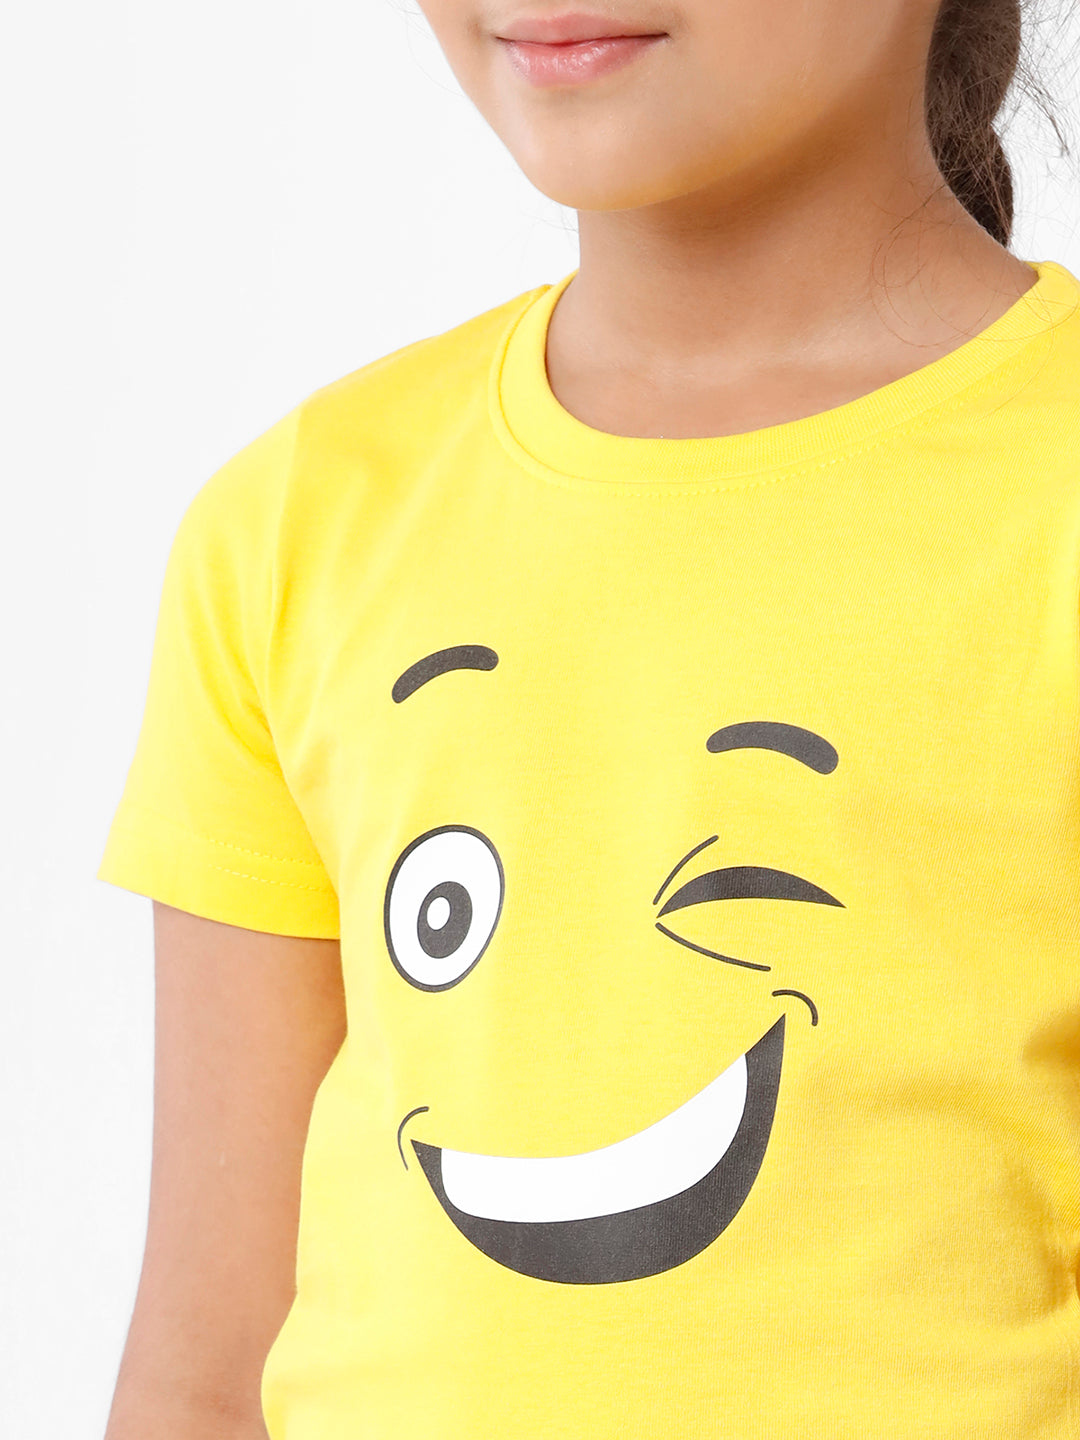 Kids - Girls Printed Top Lemon